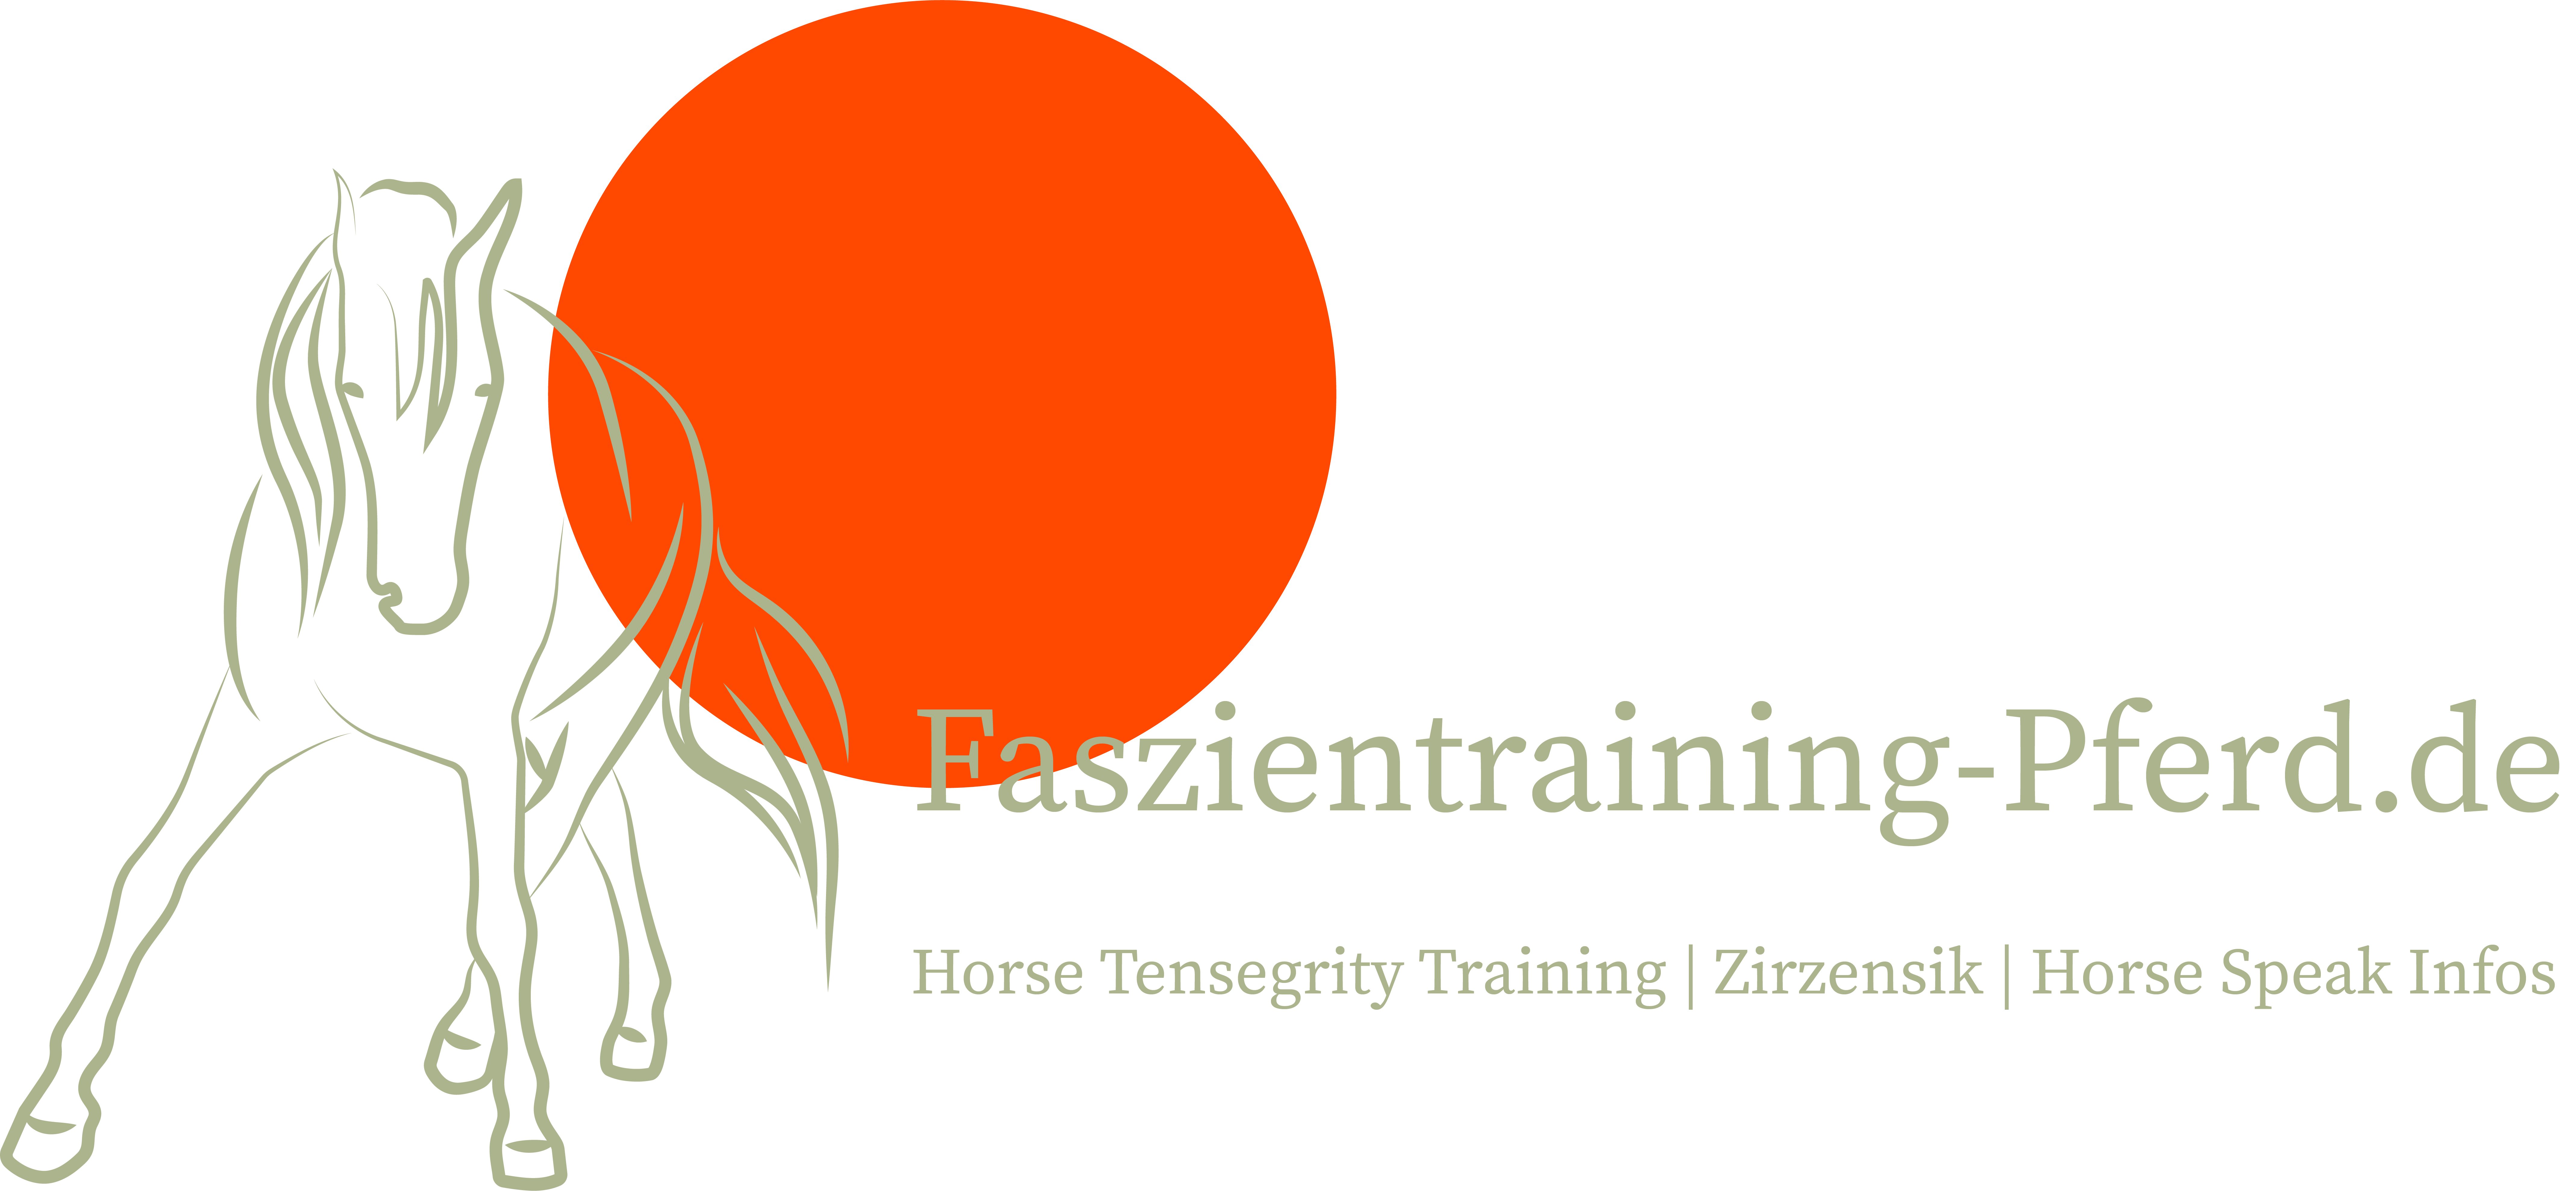 Faszientraining-Pferd.de Horse Tensegrity Training Zirzensik und Horse Speak Infos